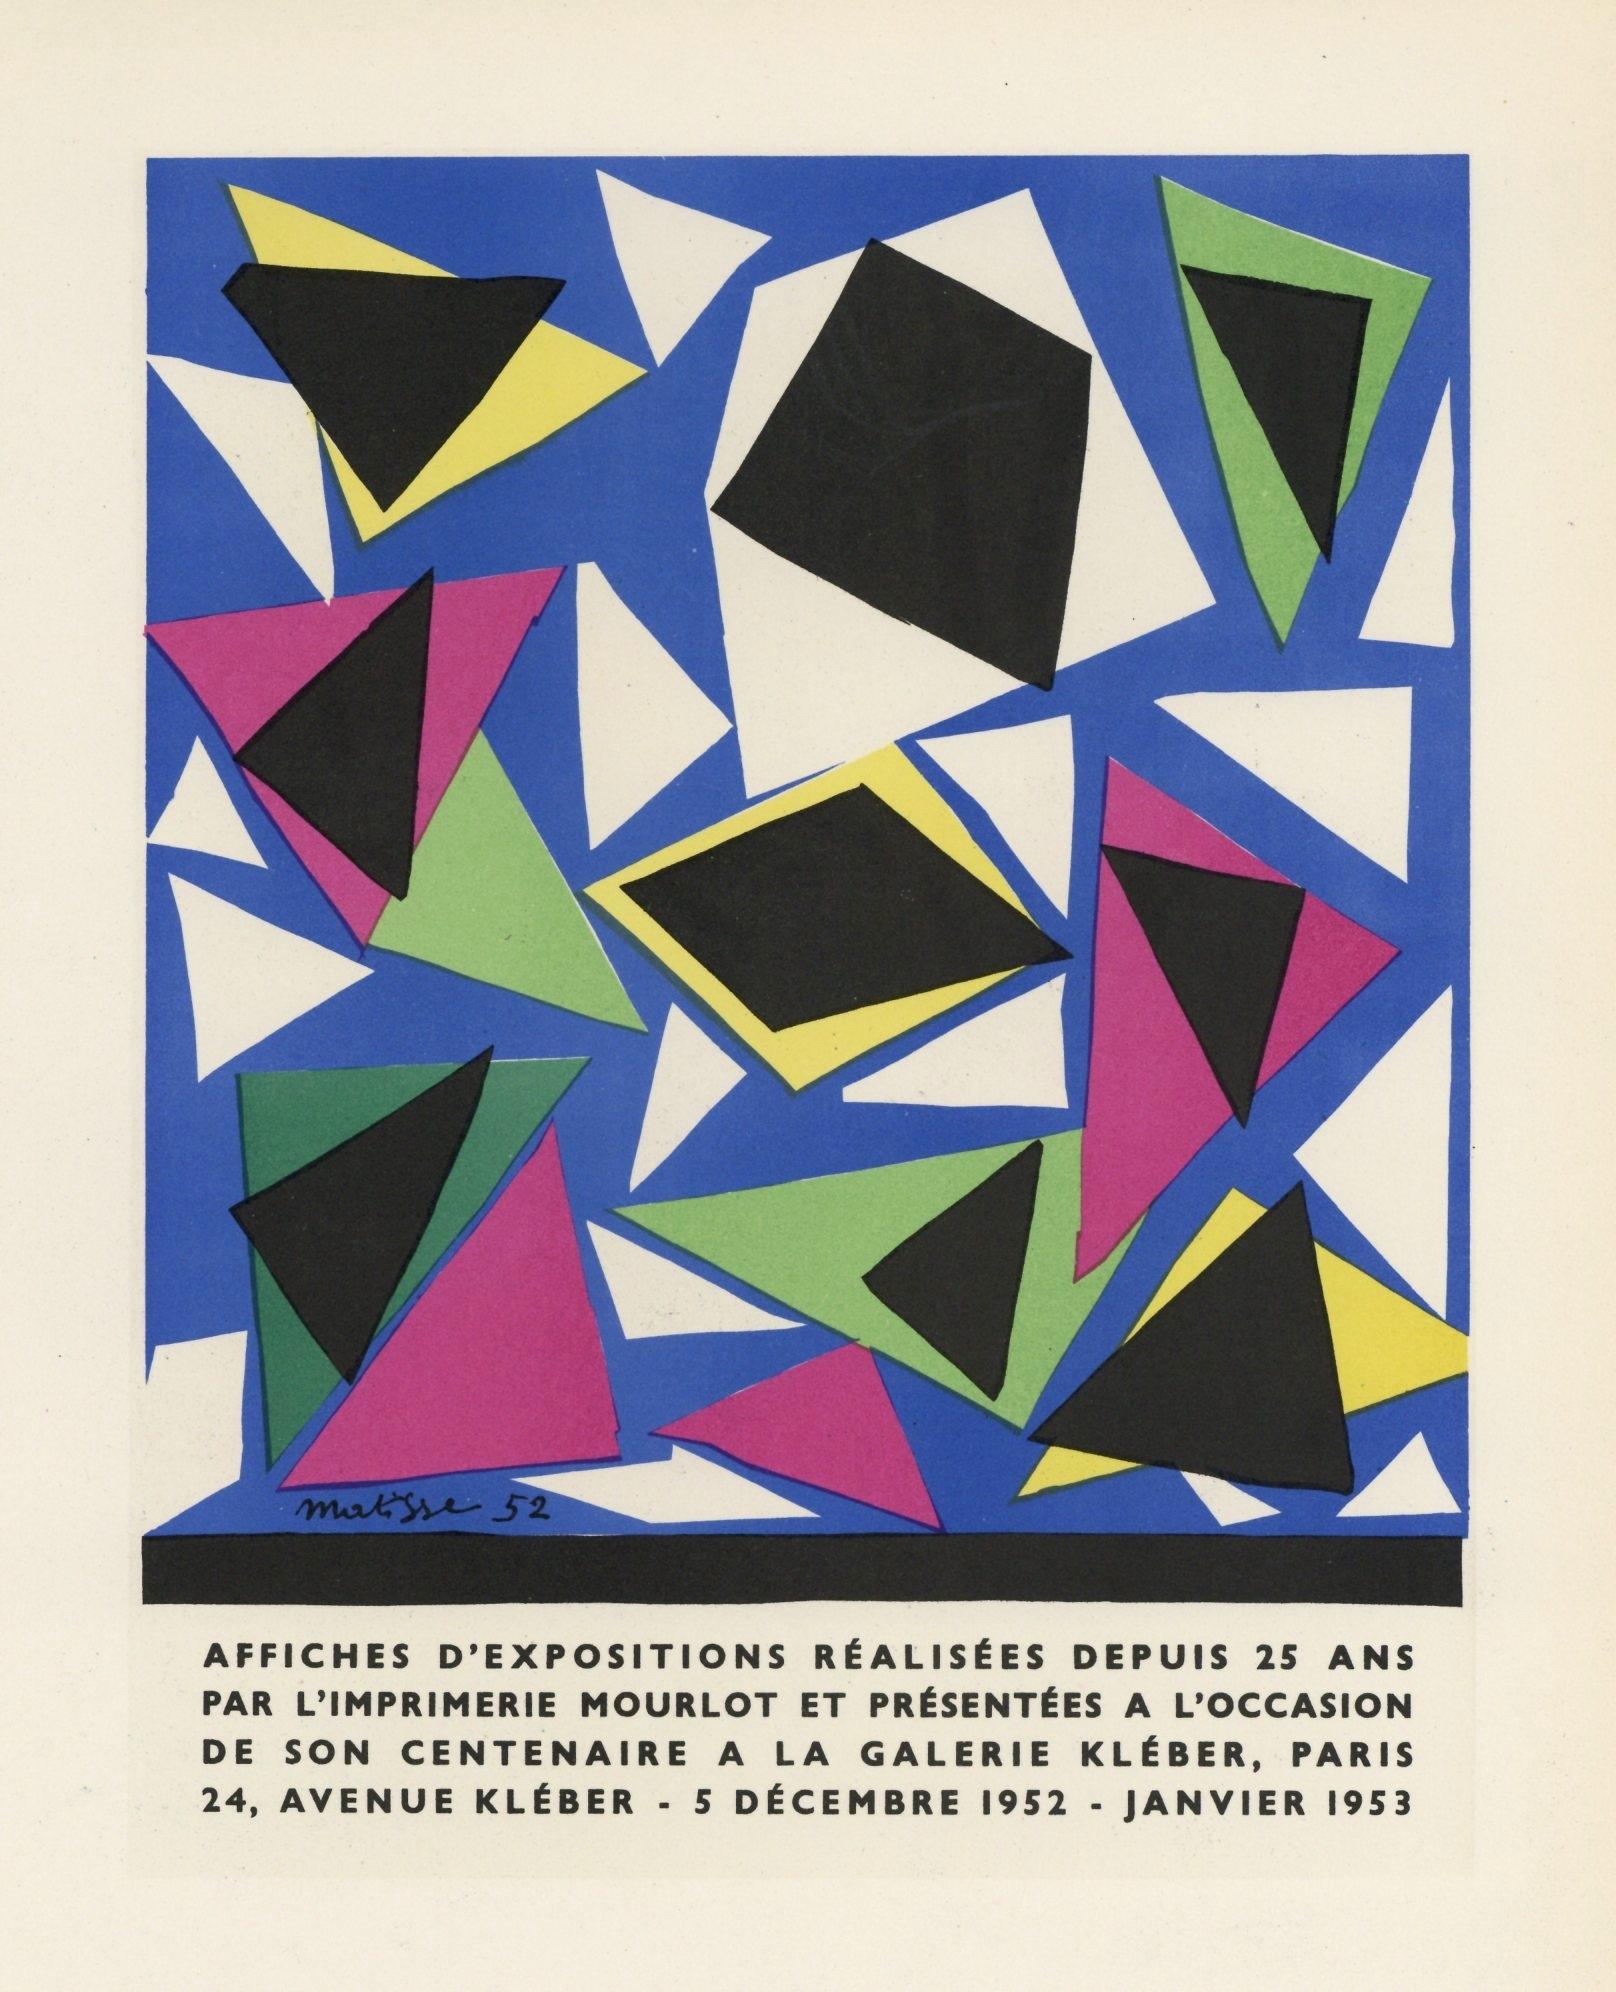 (after) Henri Matisse Portrait Print - "Exposition D'Affiches" lithograph poster